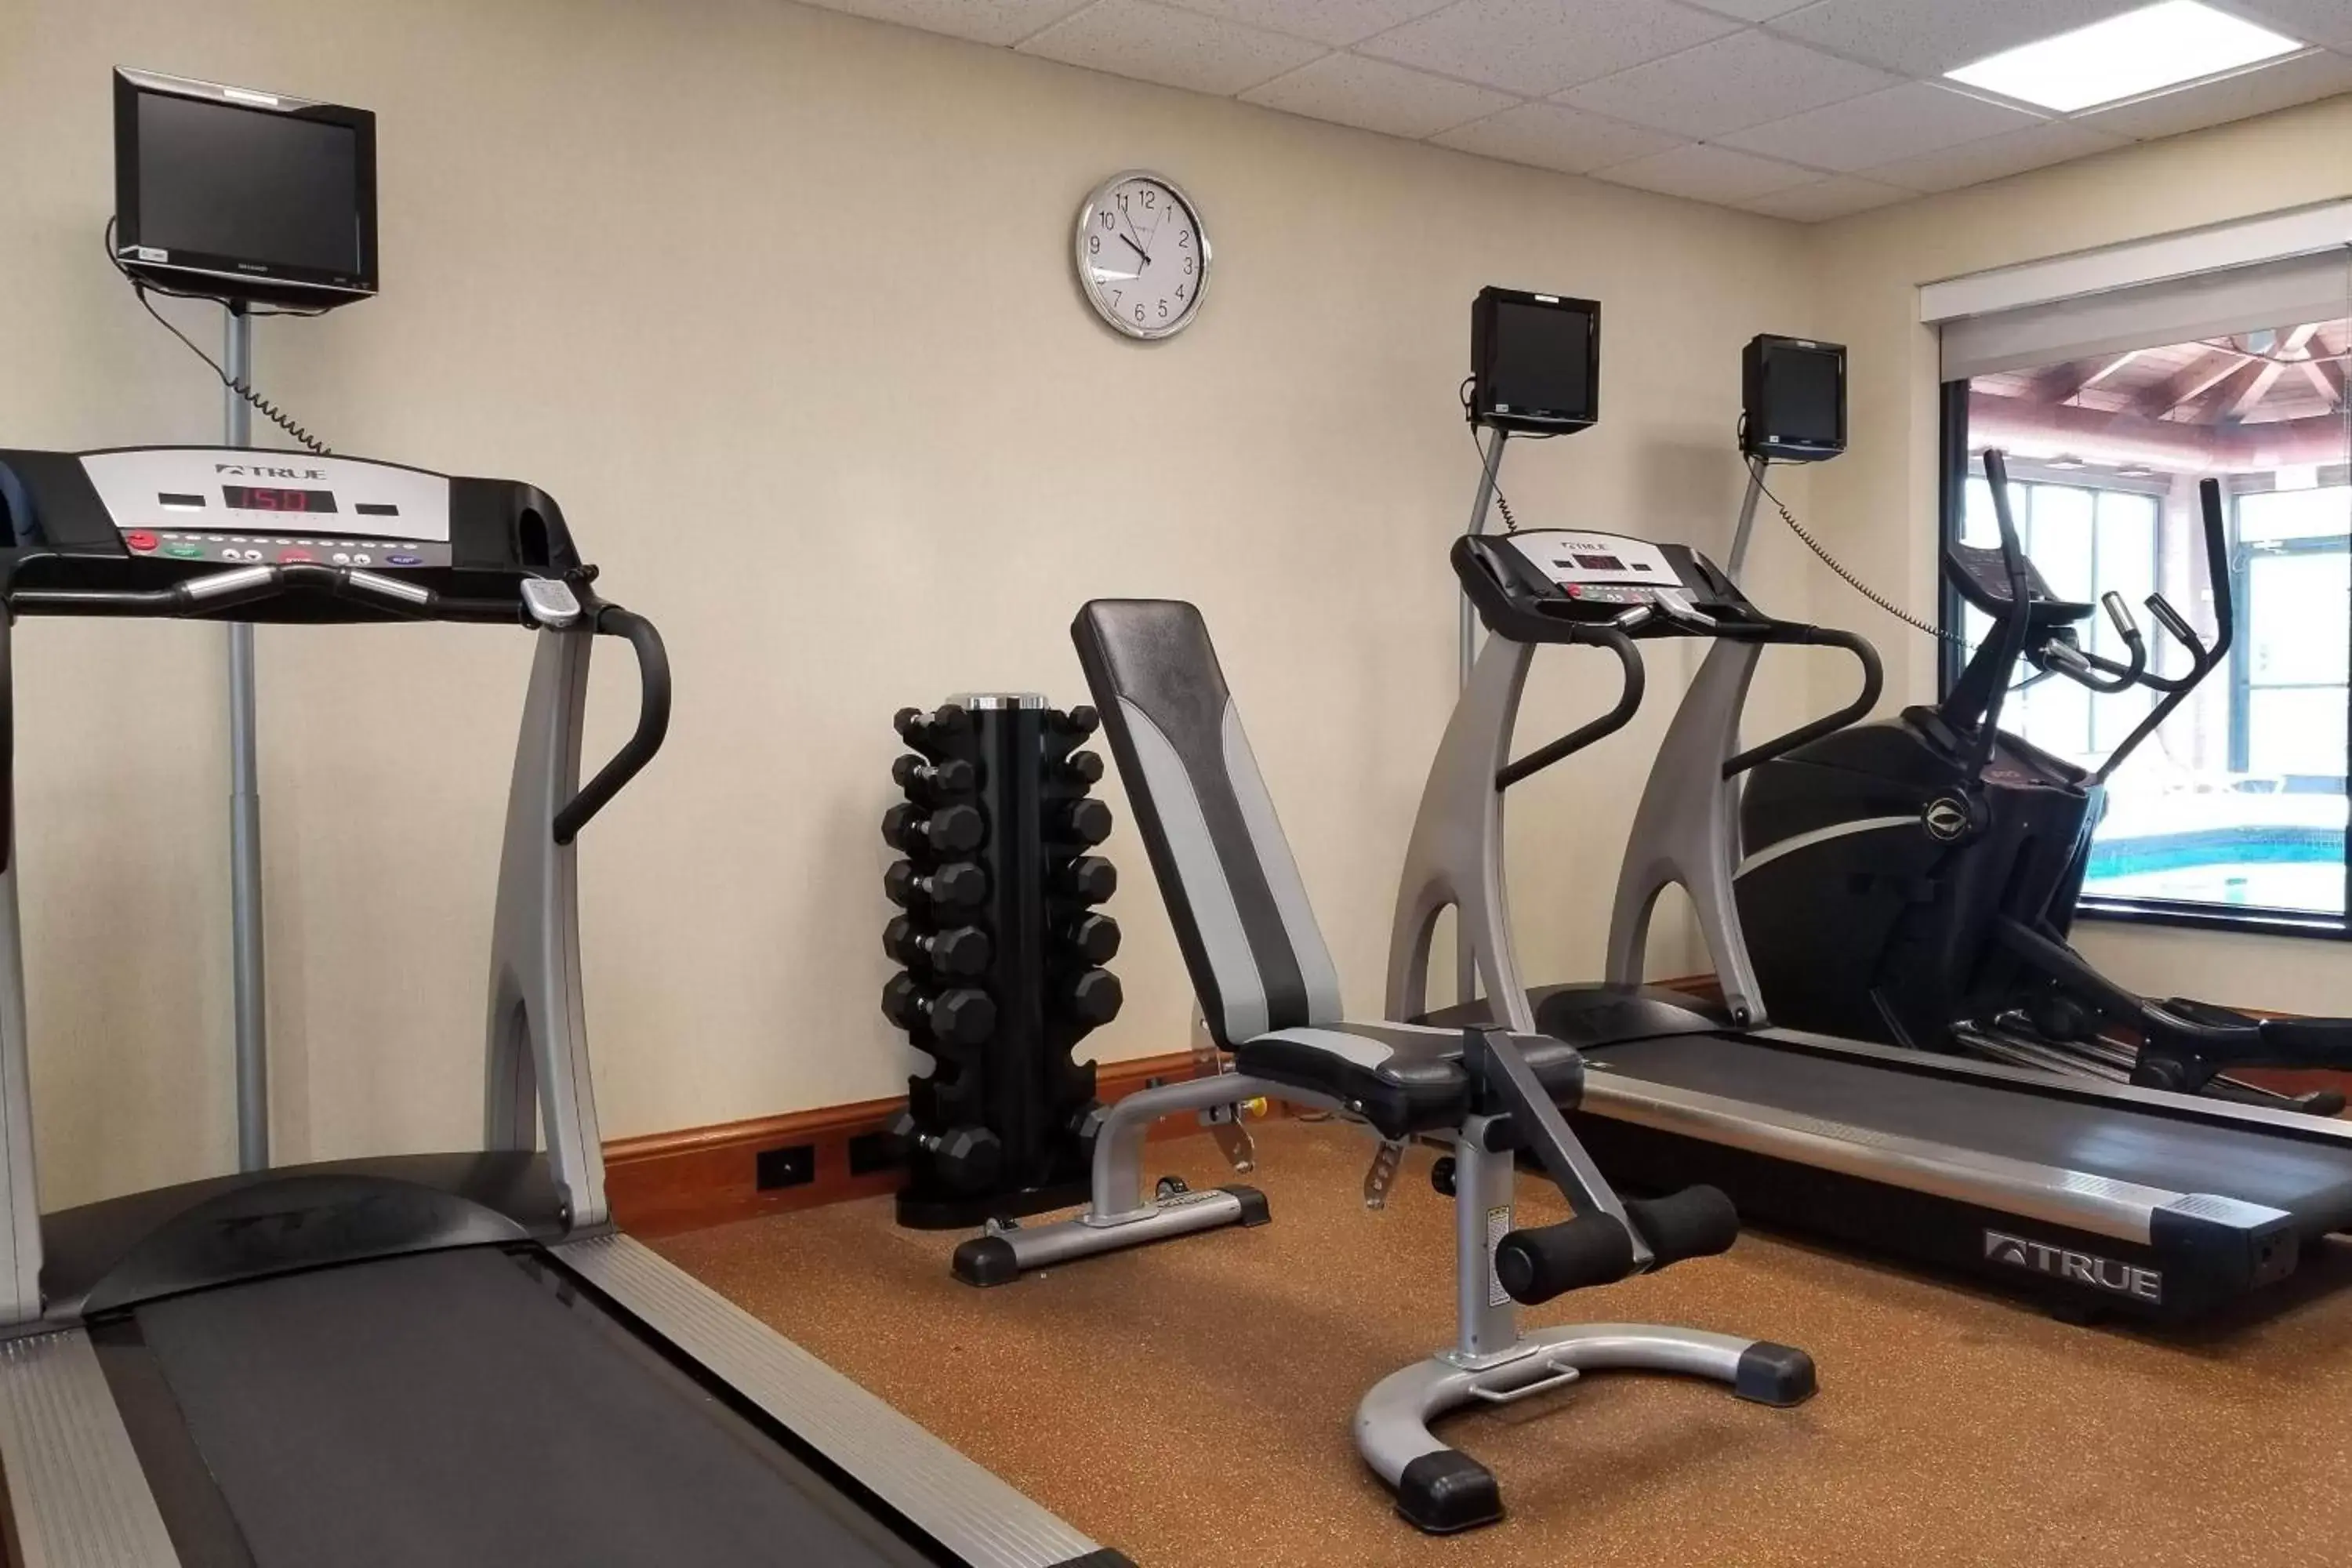 Fitness centre/facilities, Fitness Center/Facilities in Fairfield Inn by Marriot Binghamton